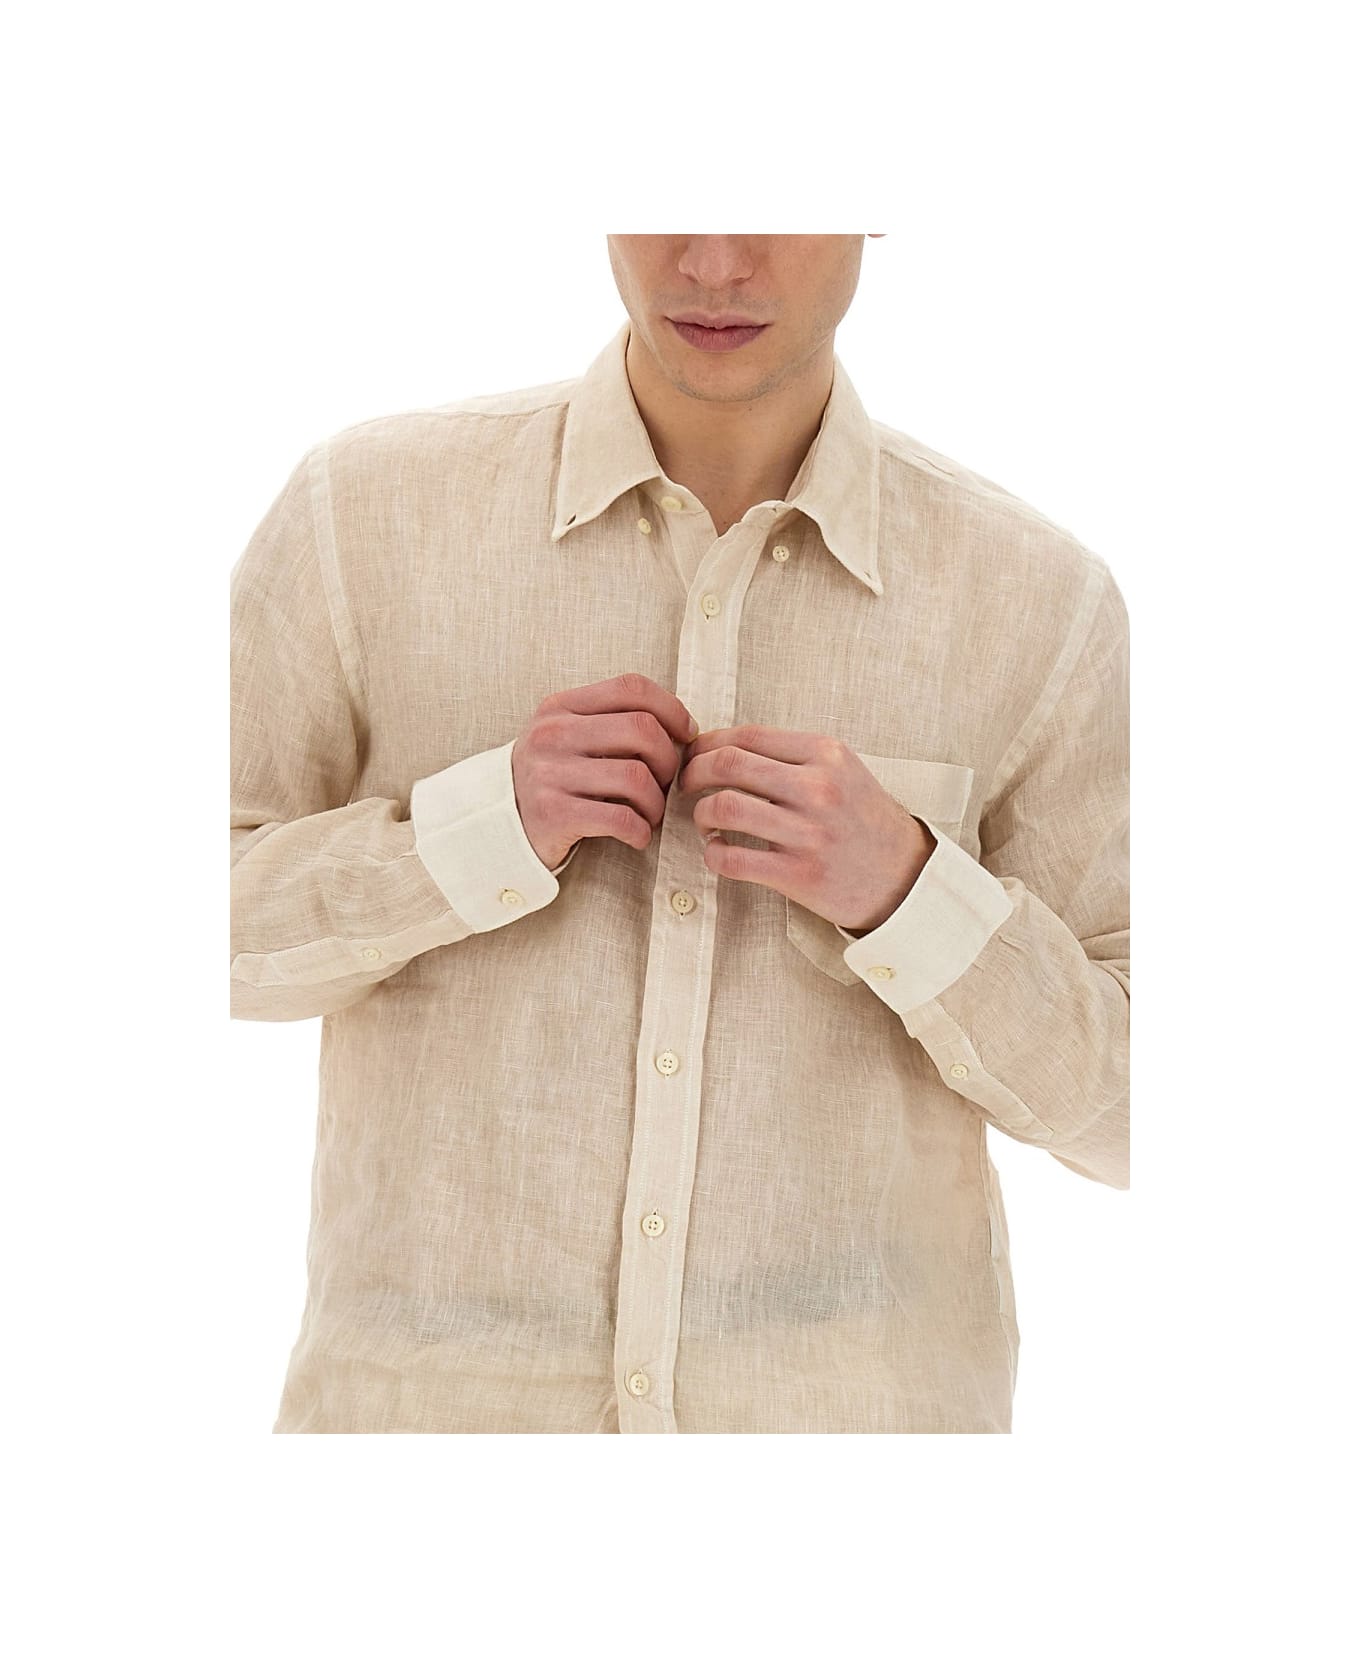 120% Lino Linen Shirt - BEIGE シャツ